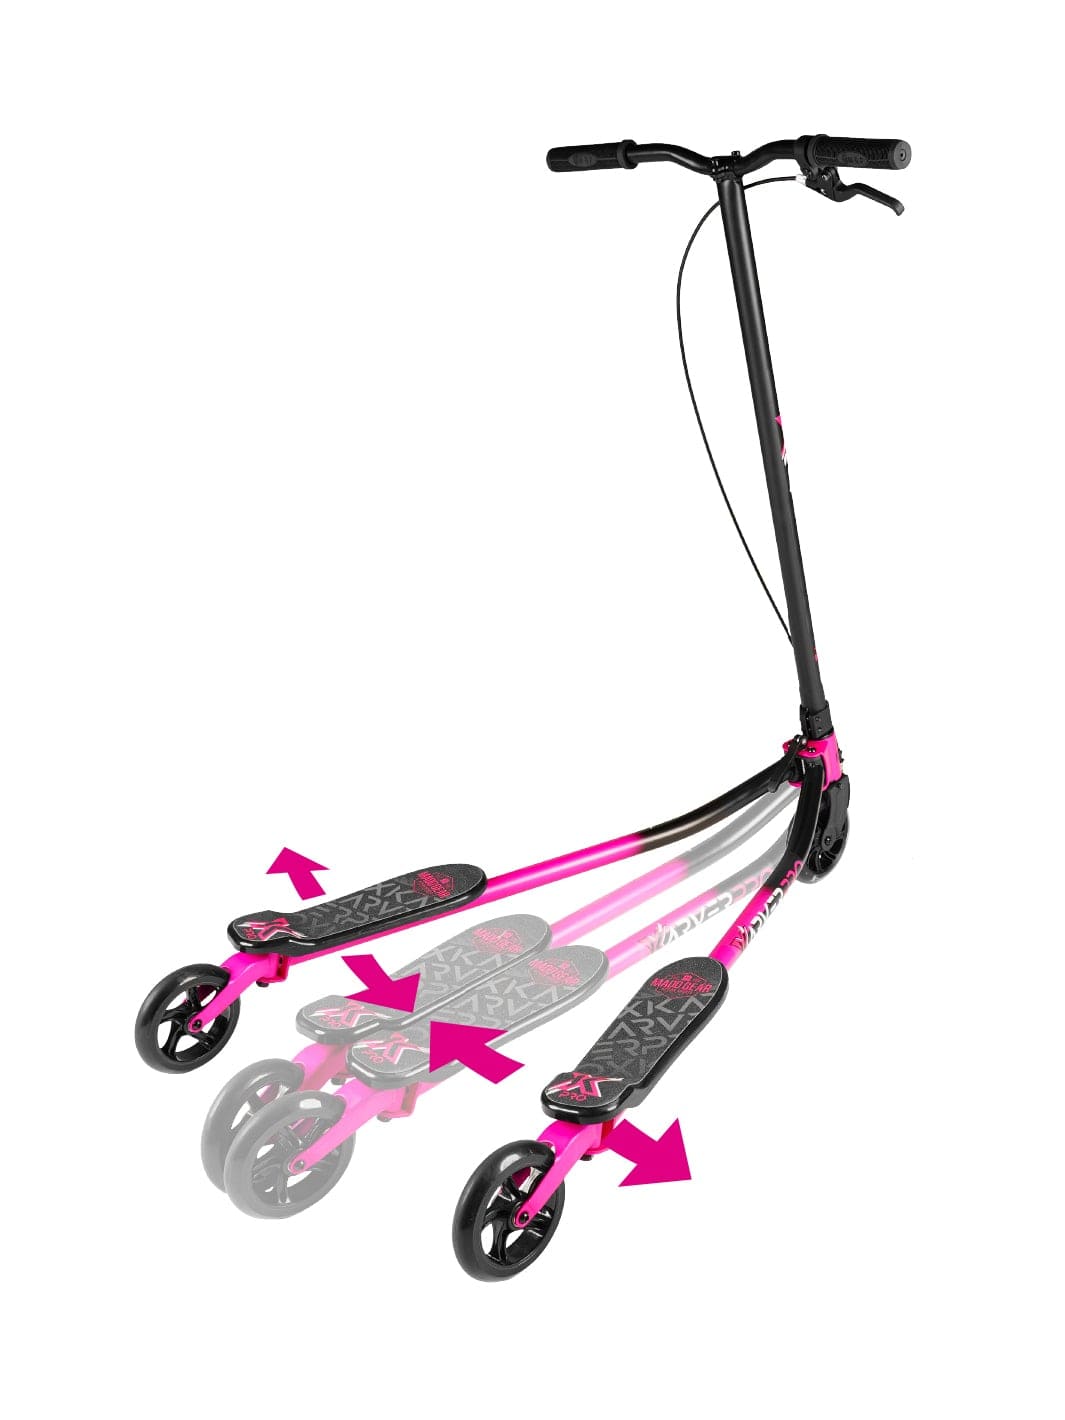 Madd Gear X-Karver Kids Childrens Scooter Fliker Yvolution Pink Black Boy Girls light up wheels